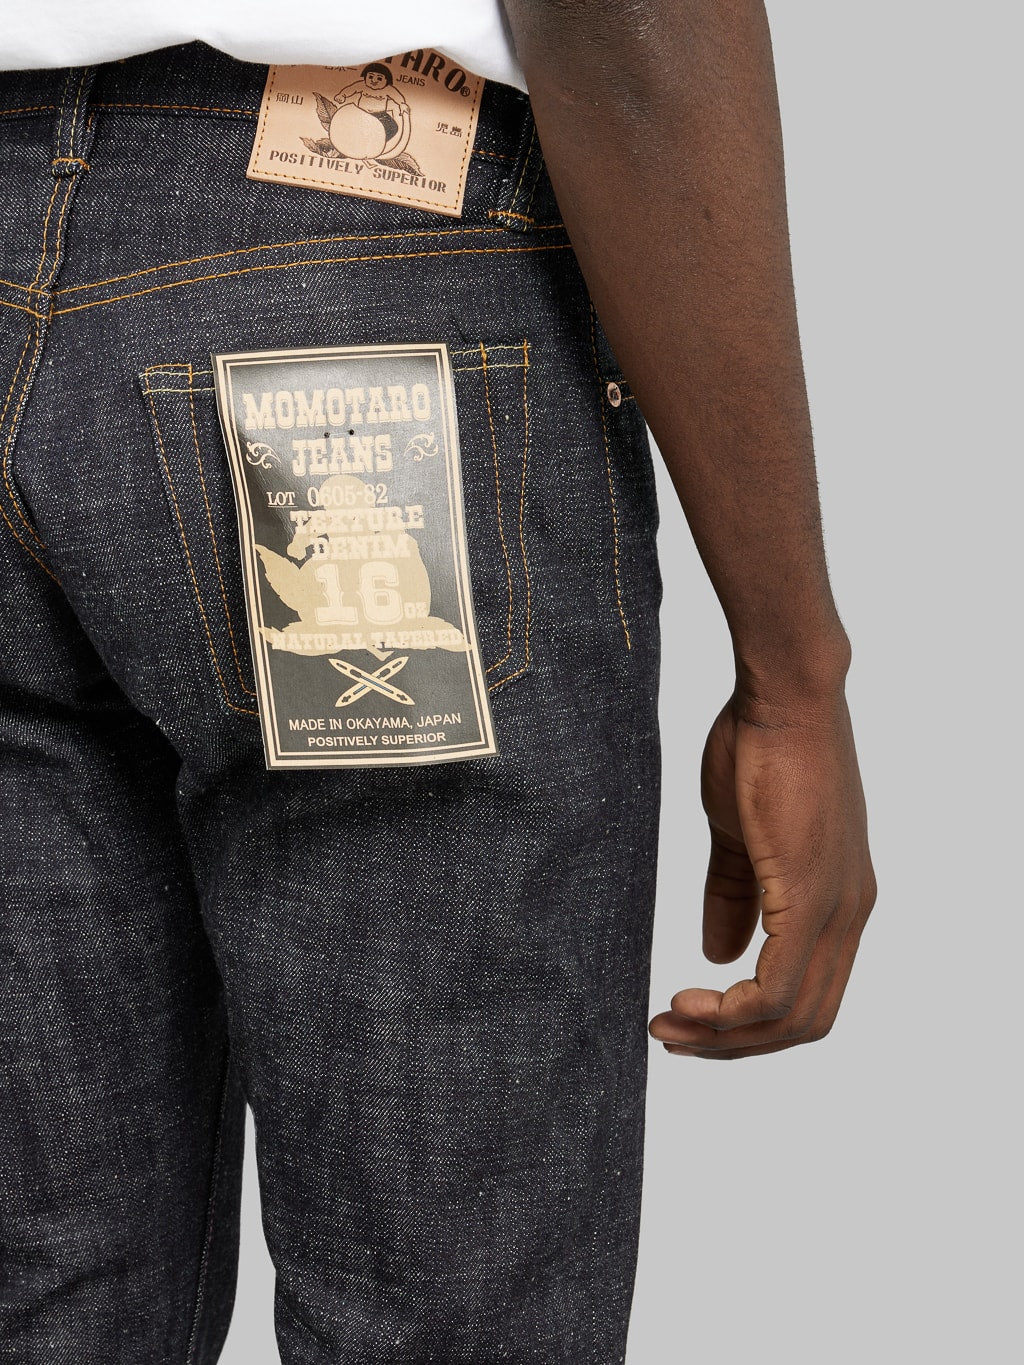 momotaro jeans 0605 82 16oz texture denim natural tapered pocket flasher